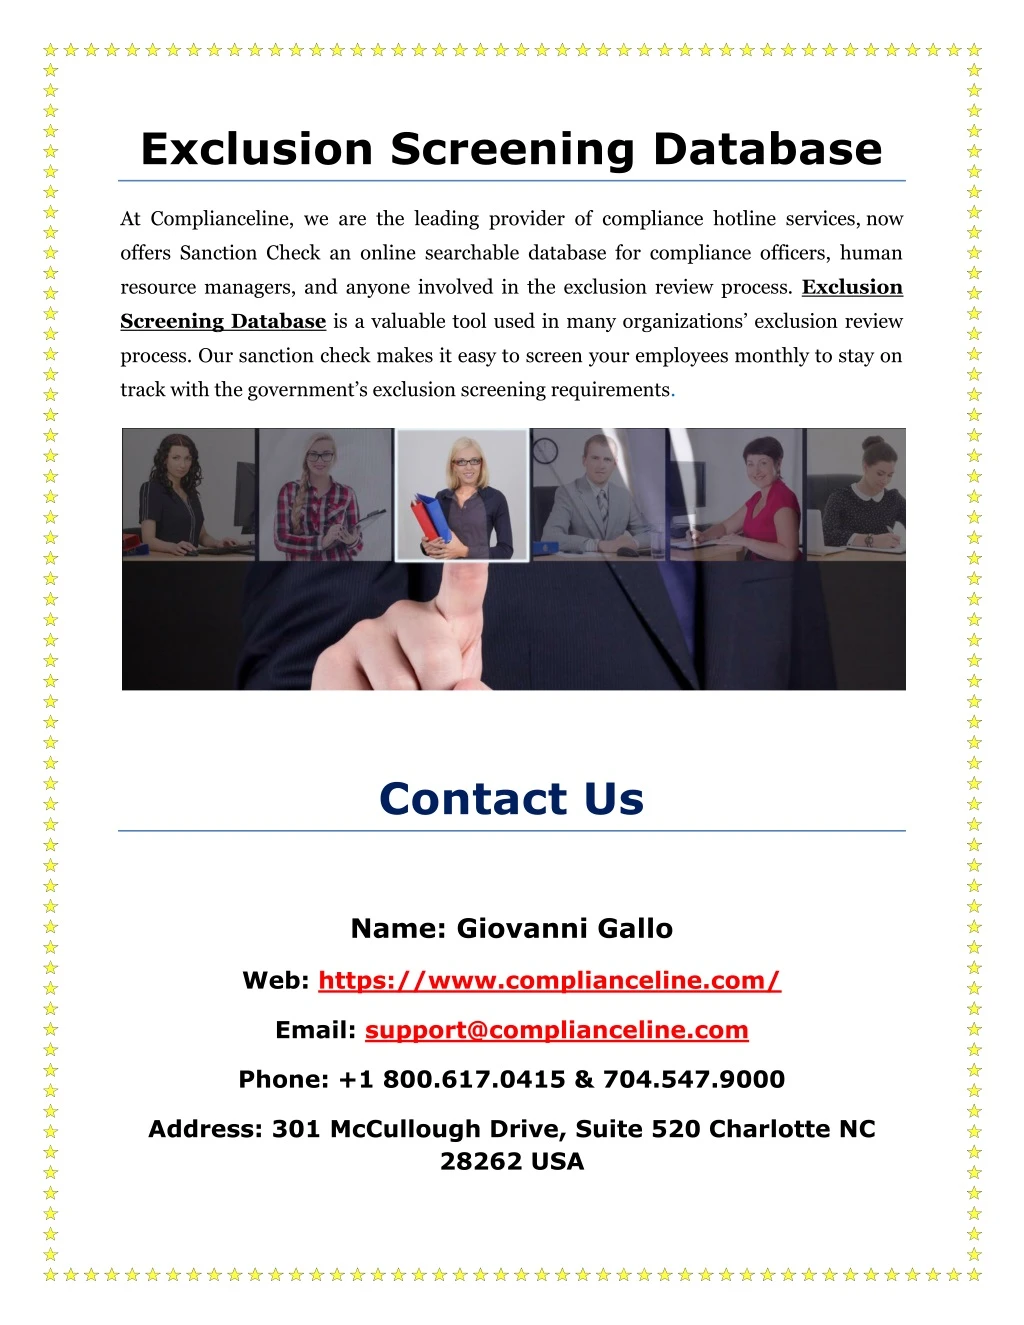 exclusion screening database